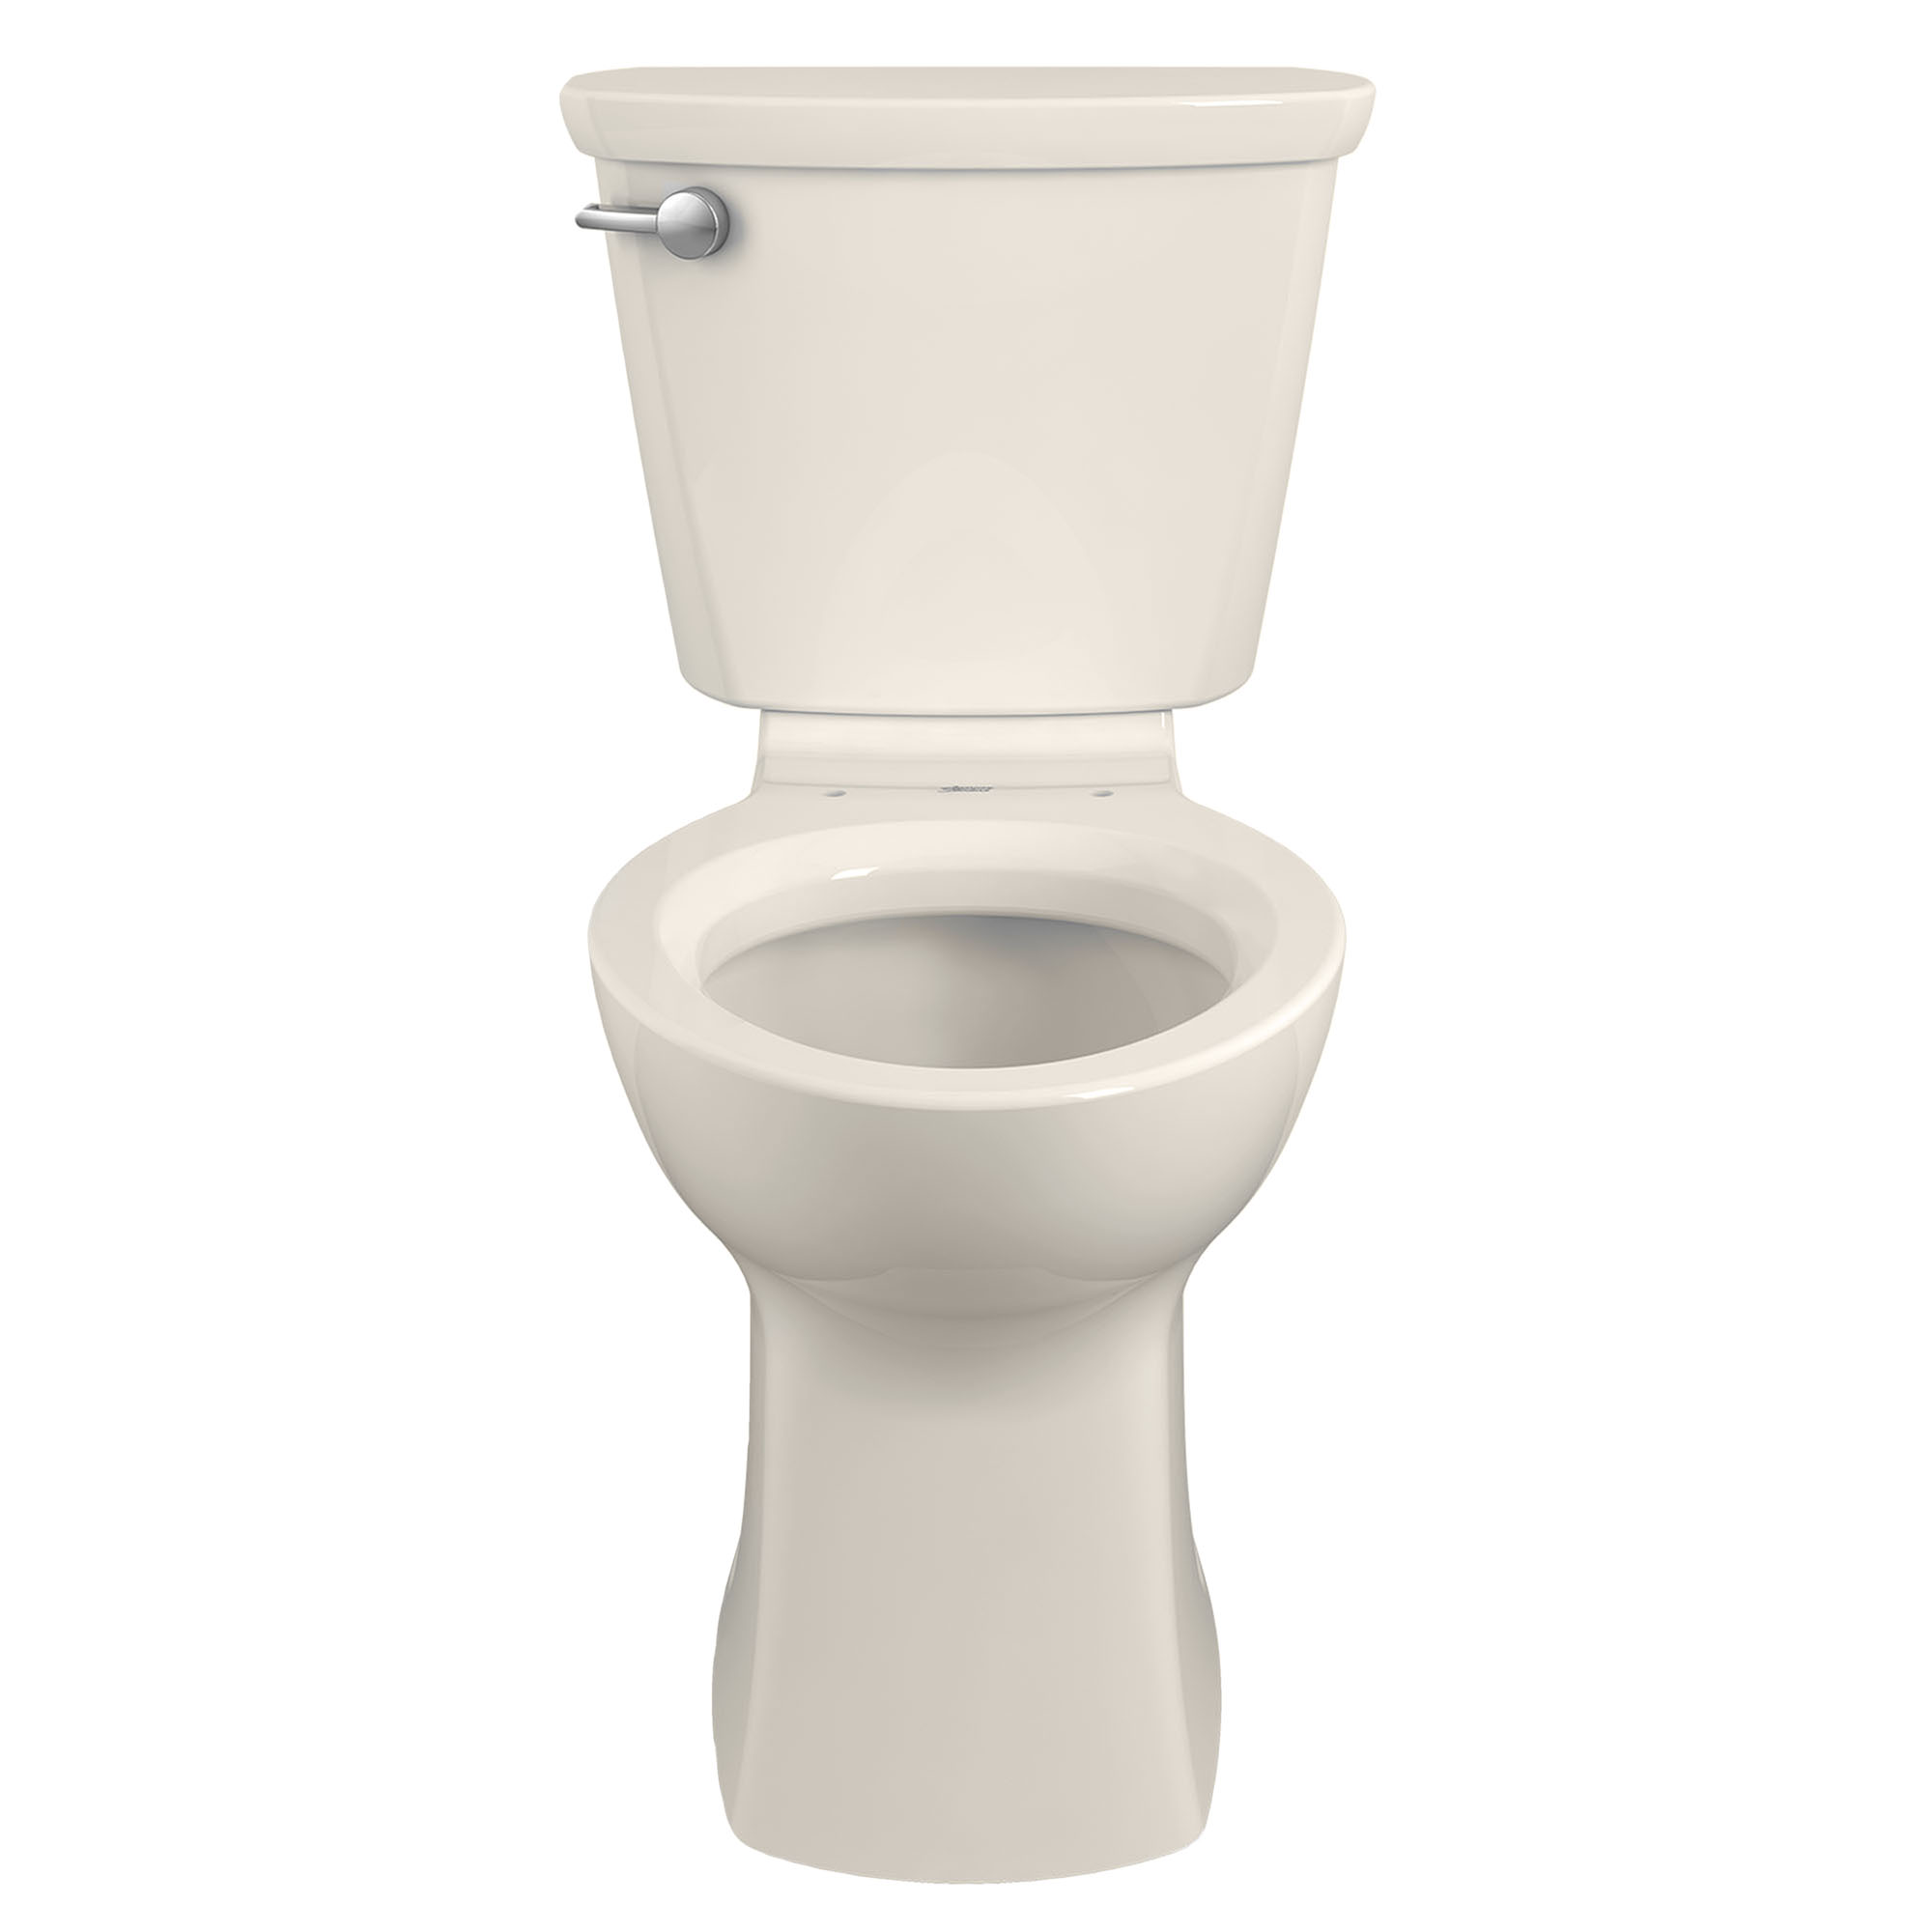 Cadet™ PRO Two-Piece 1.6 gpf/6.0 Lpf Standard Height Elongated Toilet Less Seat